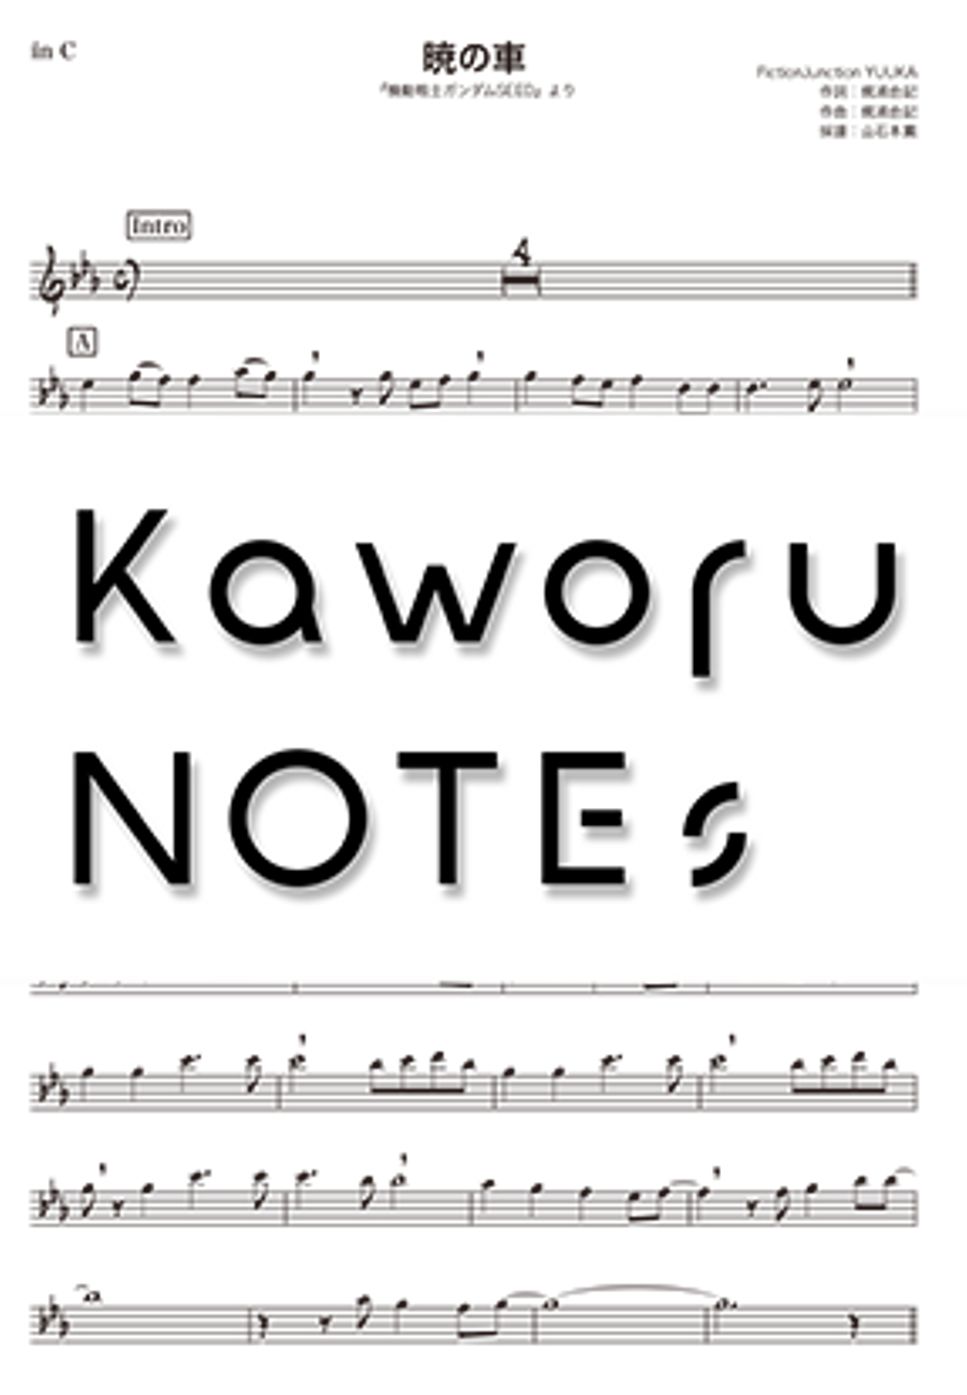 FictionJunction YUUKA - Akatsuki no Kuruma（in B♭/Mobile Suit Gundam SEED） by Kaworu NOTEs